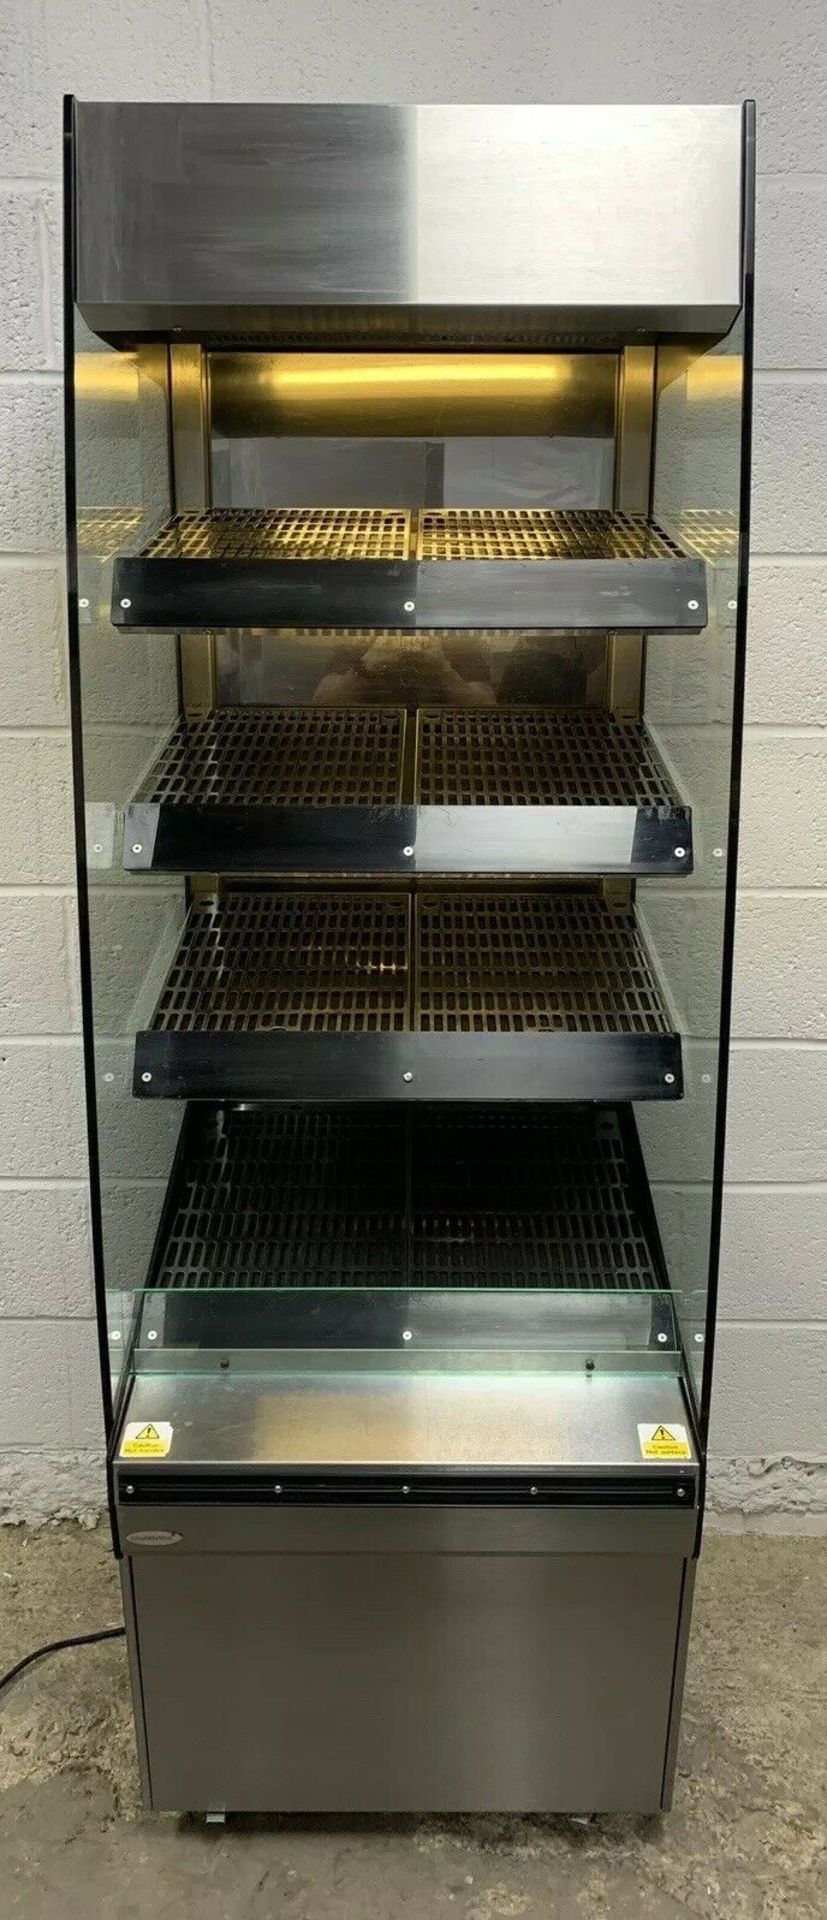 Counterline EFH600 Hot Food Display Unit - Image 6 of 7